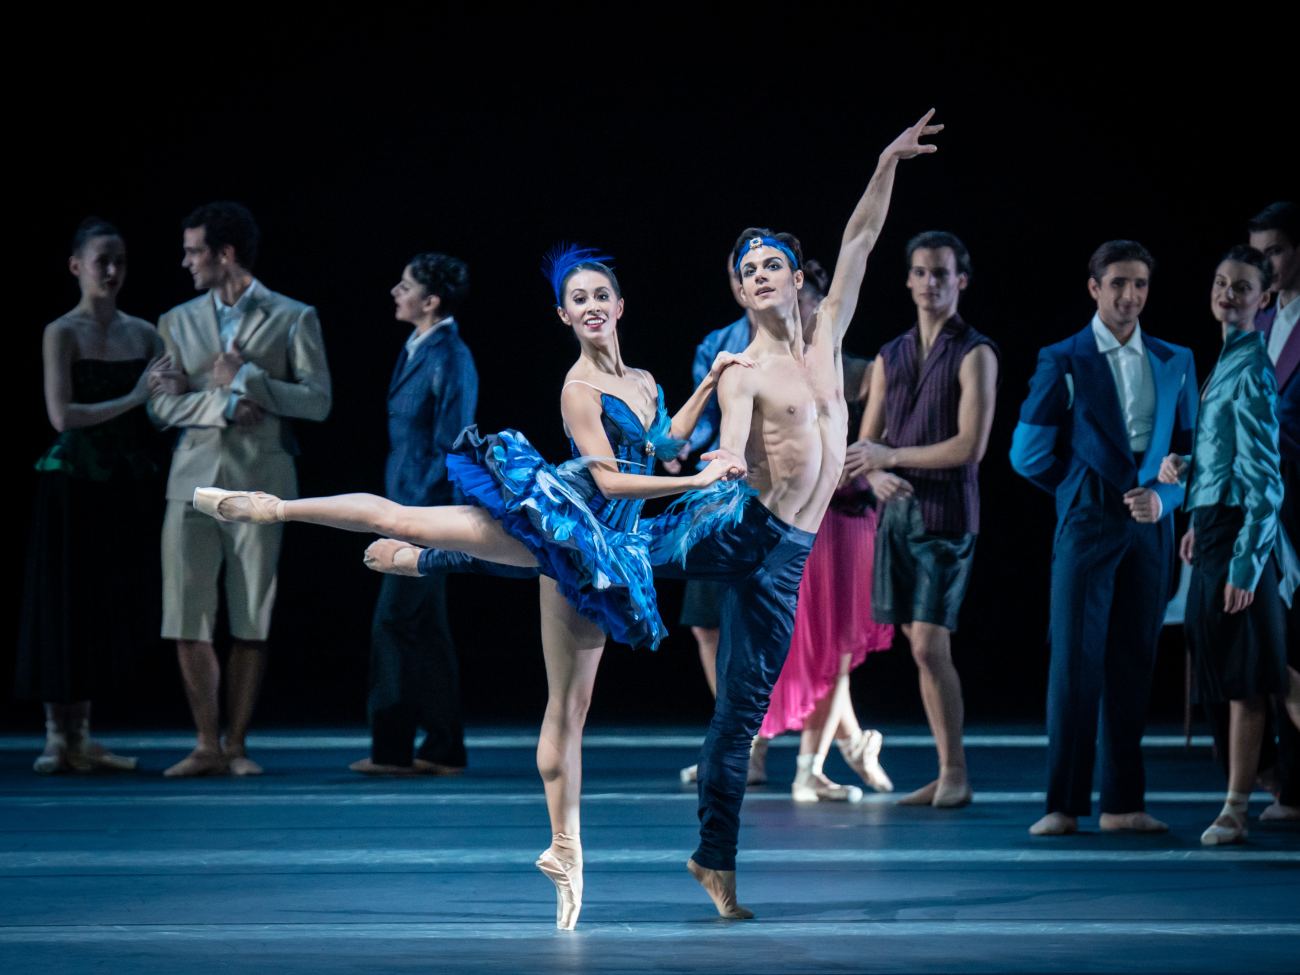 12. K.Hashimoto (Princess Florine), D.Dato (Blue Bird), and ensemble, “The Sleeping Beauty” by M.Schläpfer and M.Petipa, Vienna State Ballet 2022 © Vienna State Ballet / A.Taylor